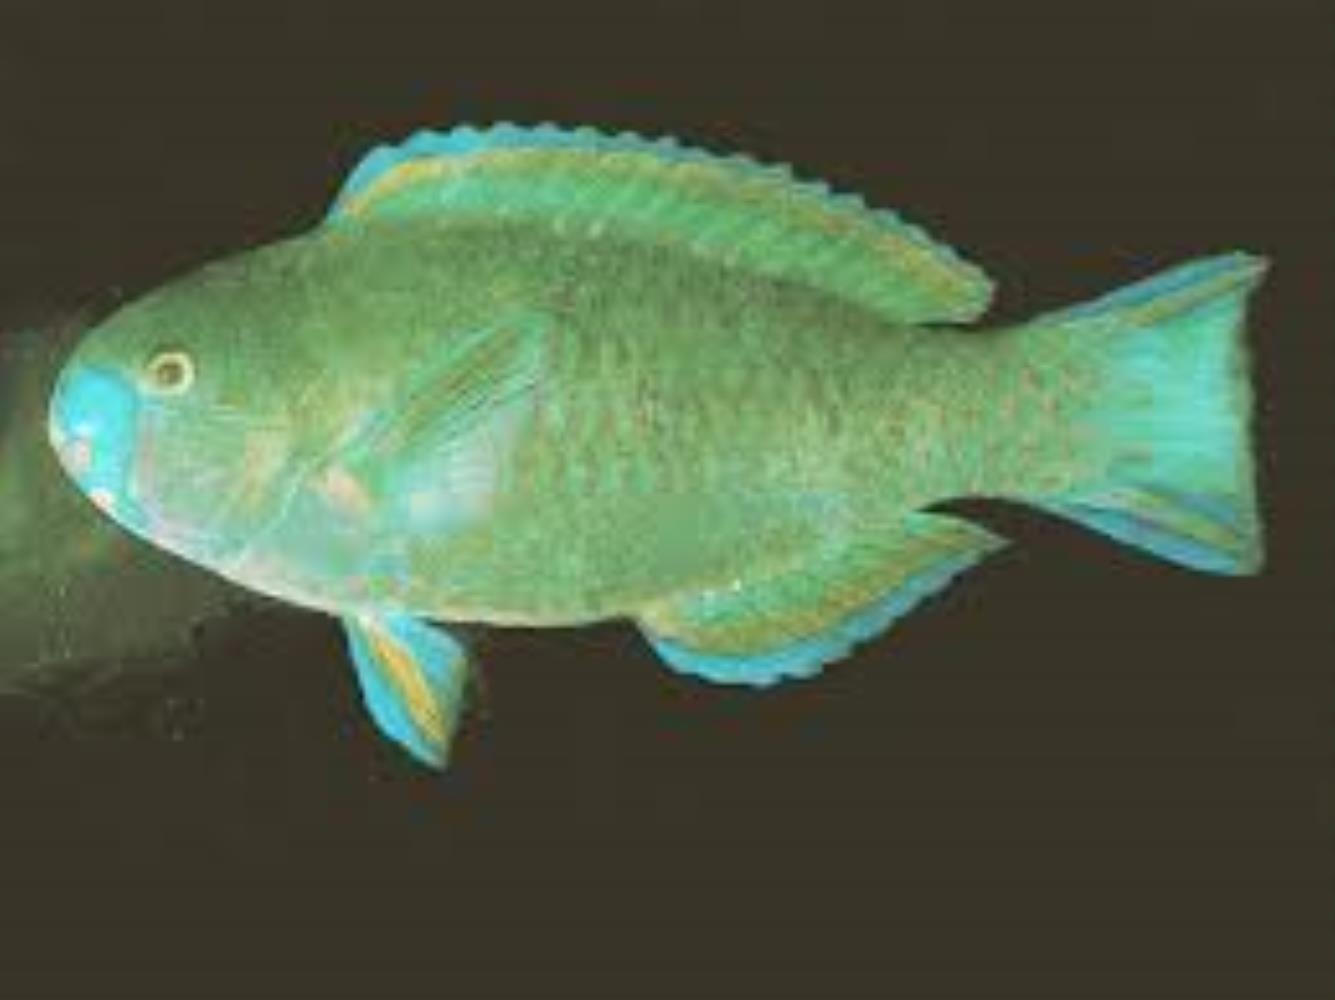 Roundhead Parrotfish